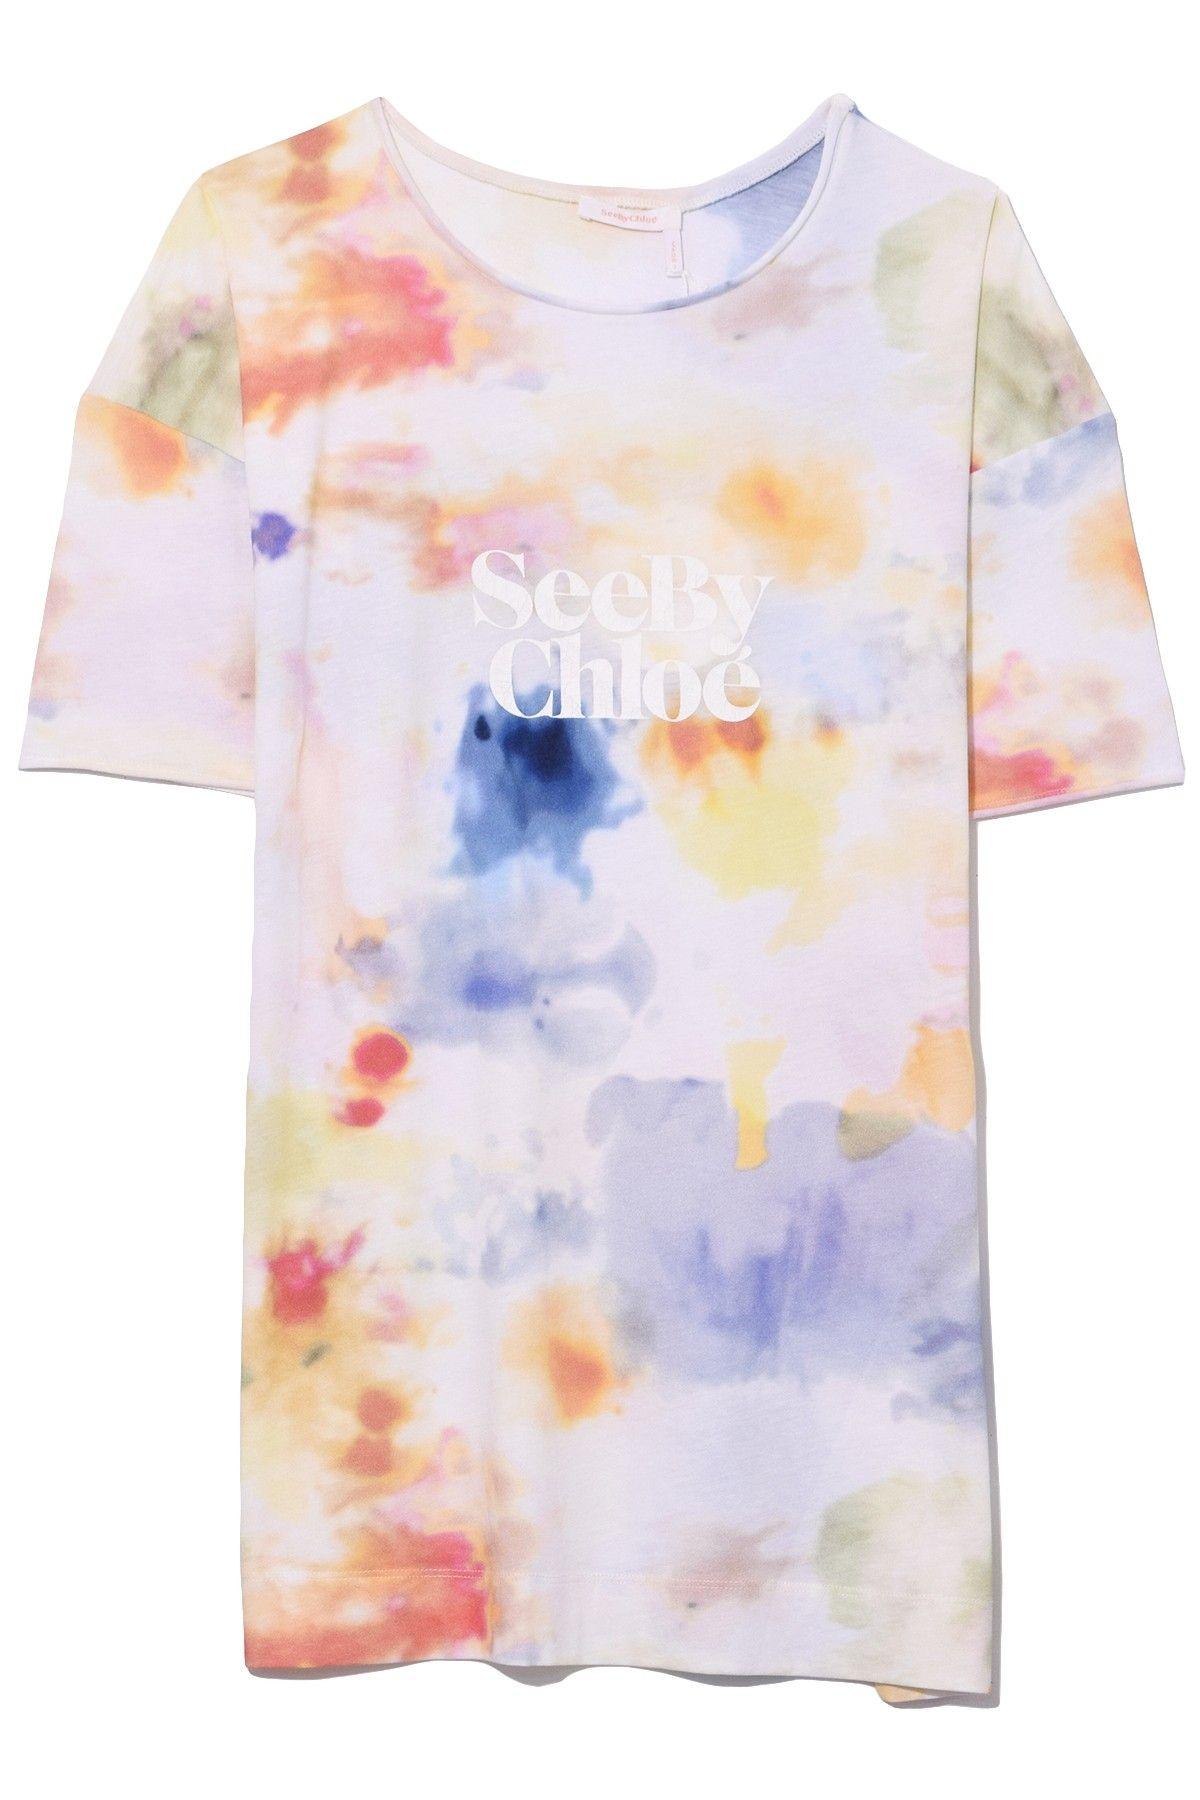 See by Chloe Logo - See By Chloe Tie Dye Logo T-Shirt in Multicolor